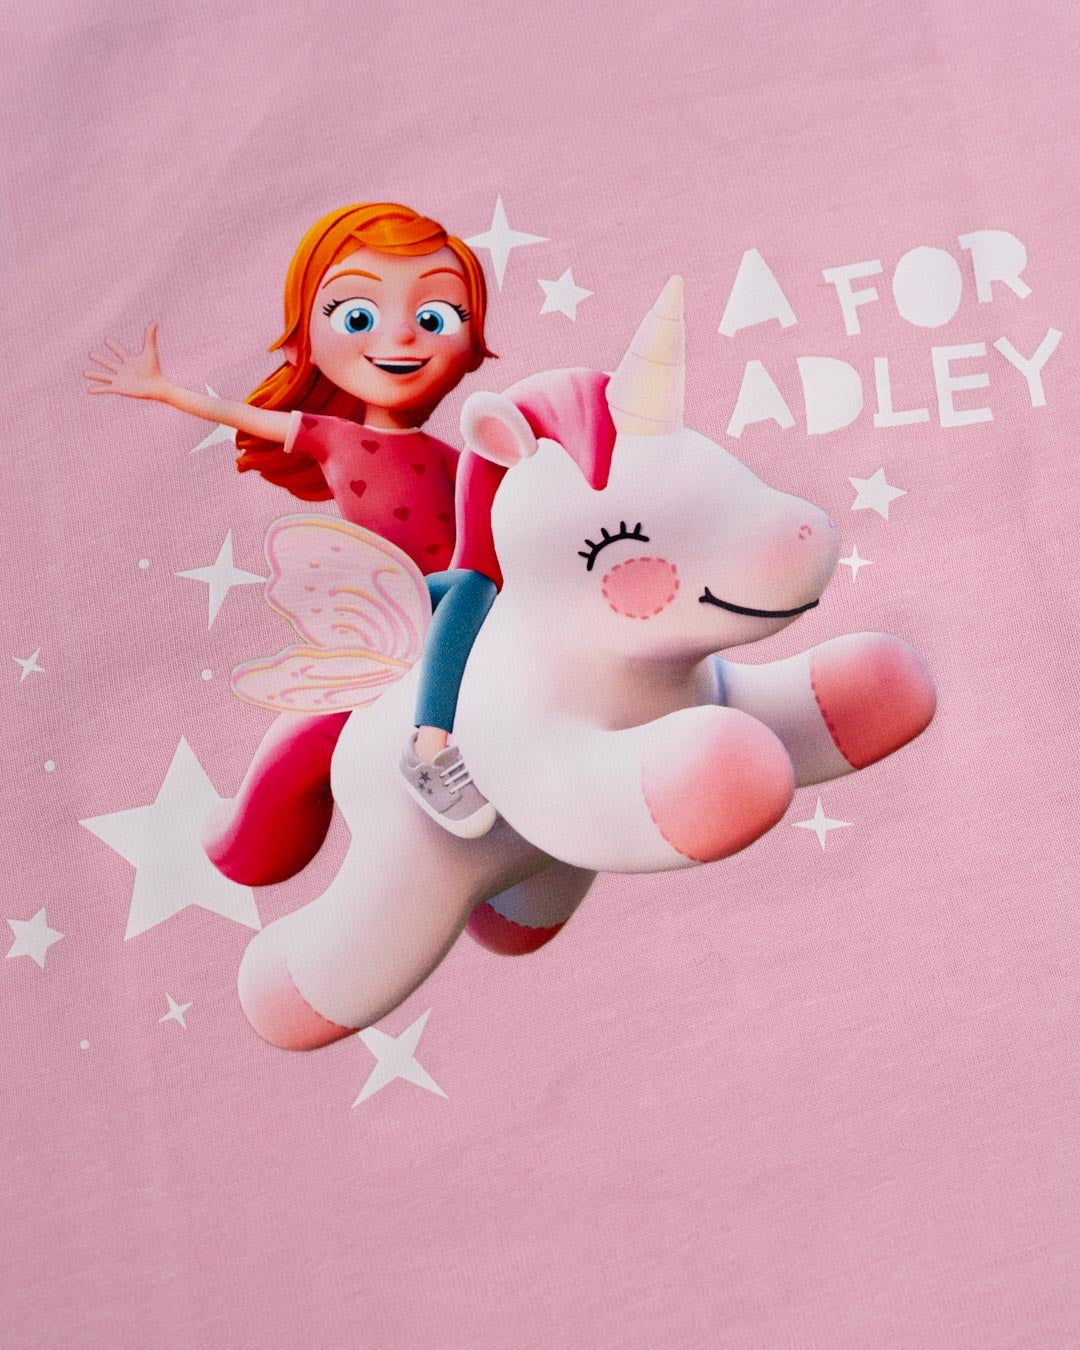 Adley's Rainbow Unicorn Backpack – Shopadley